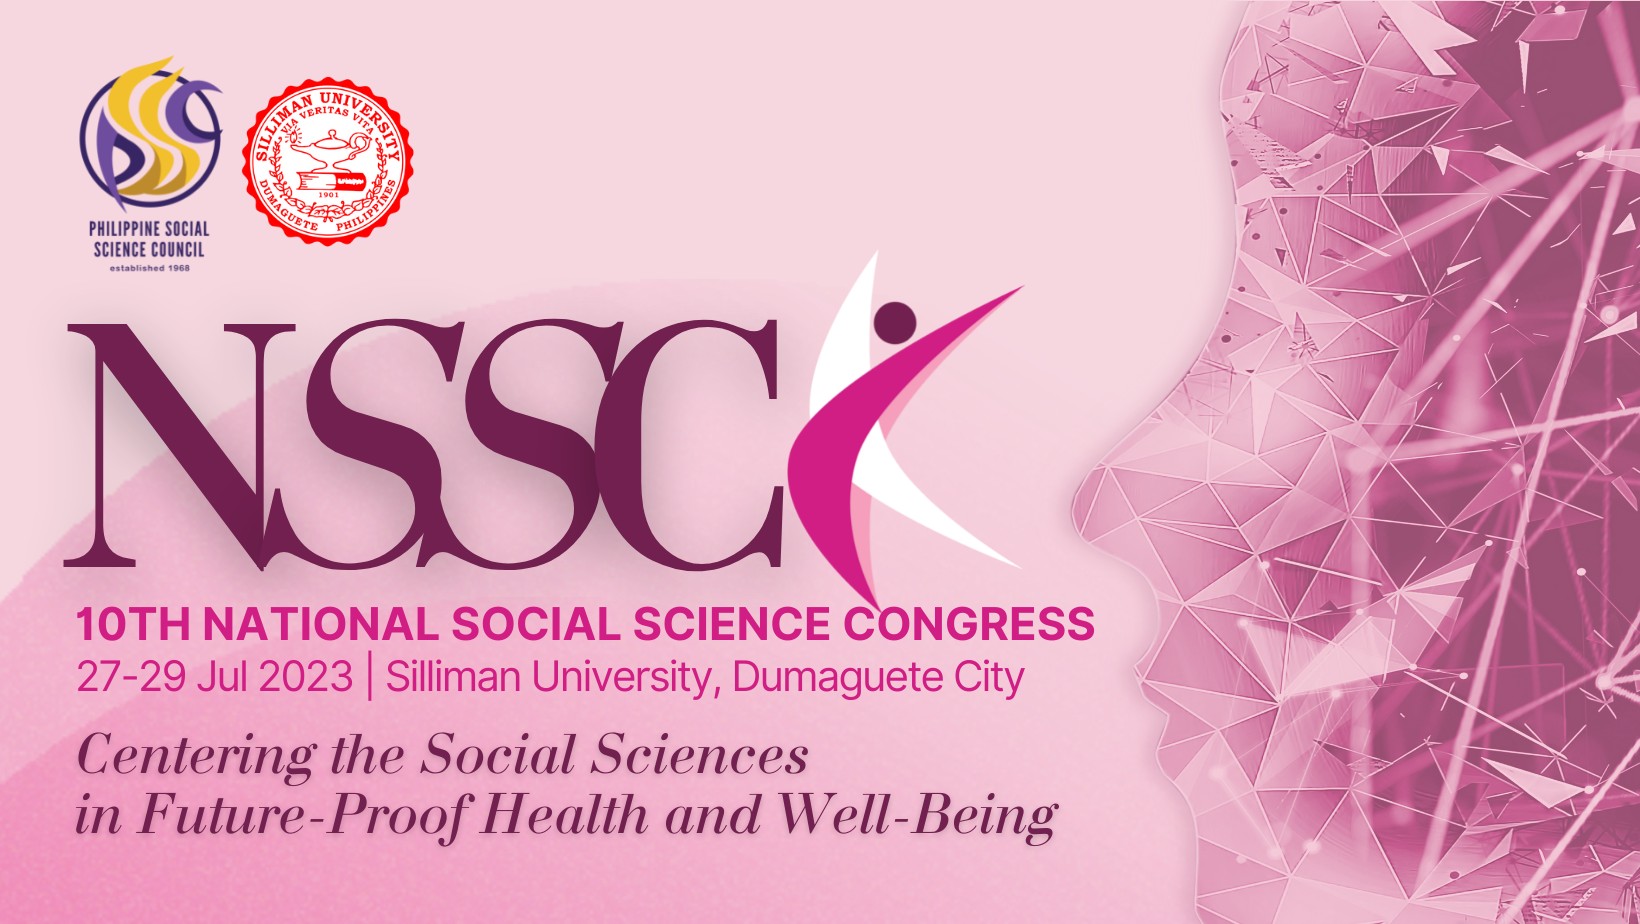 SU to host national social science congress